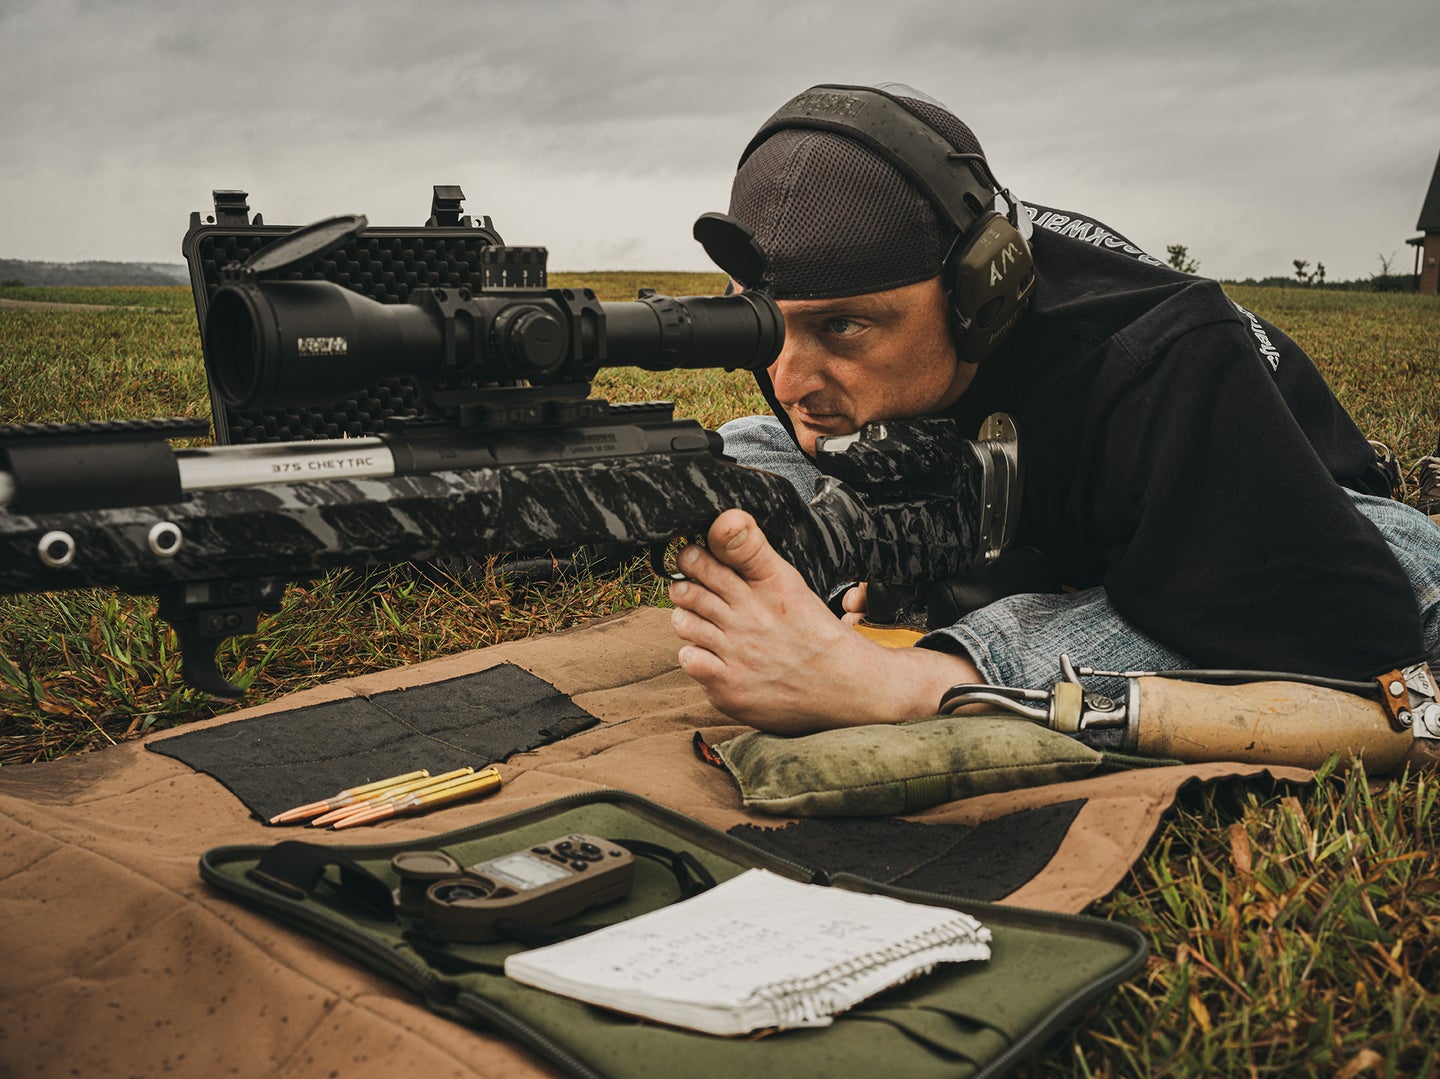 Aaron Miesse shoots a long-range rifle